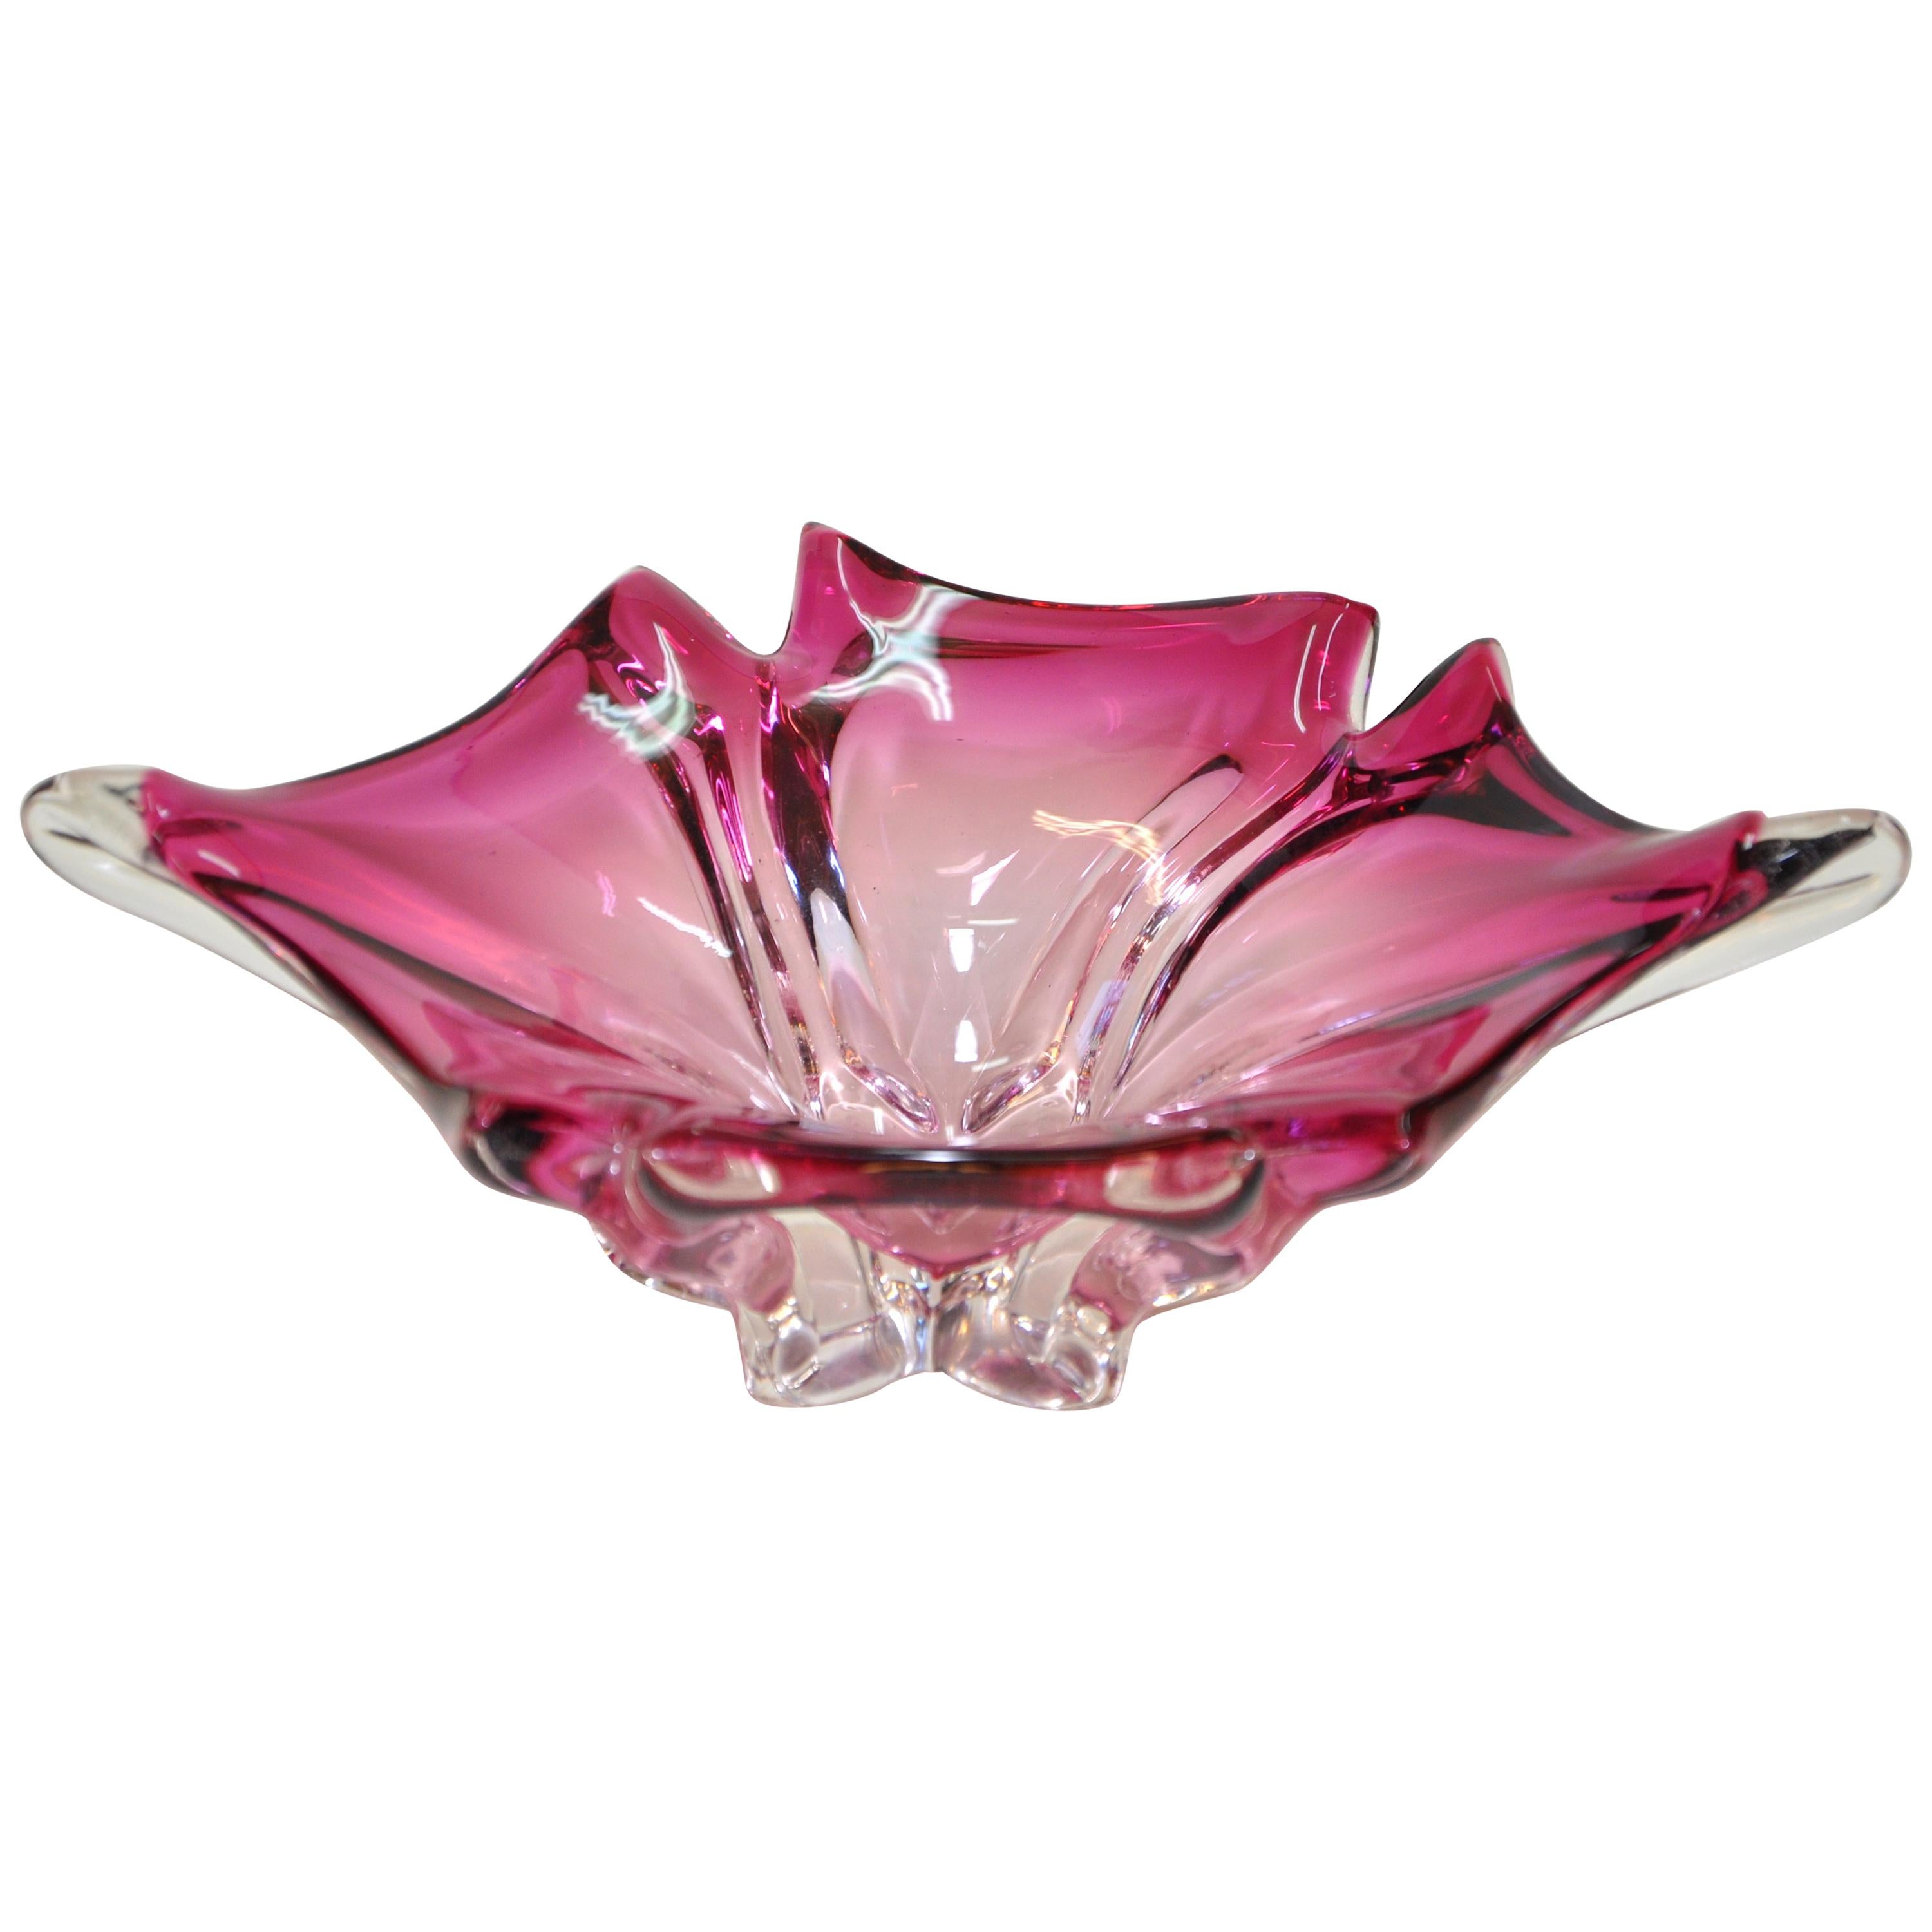 Stunning Vintage Pink Art Glass Bowl Italian Murano For Sale